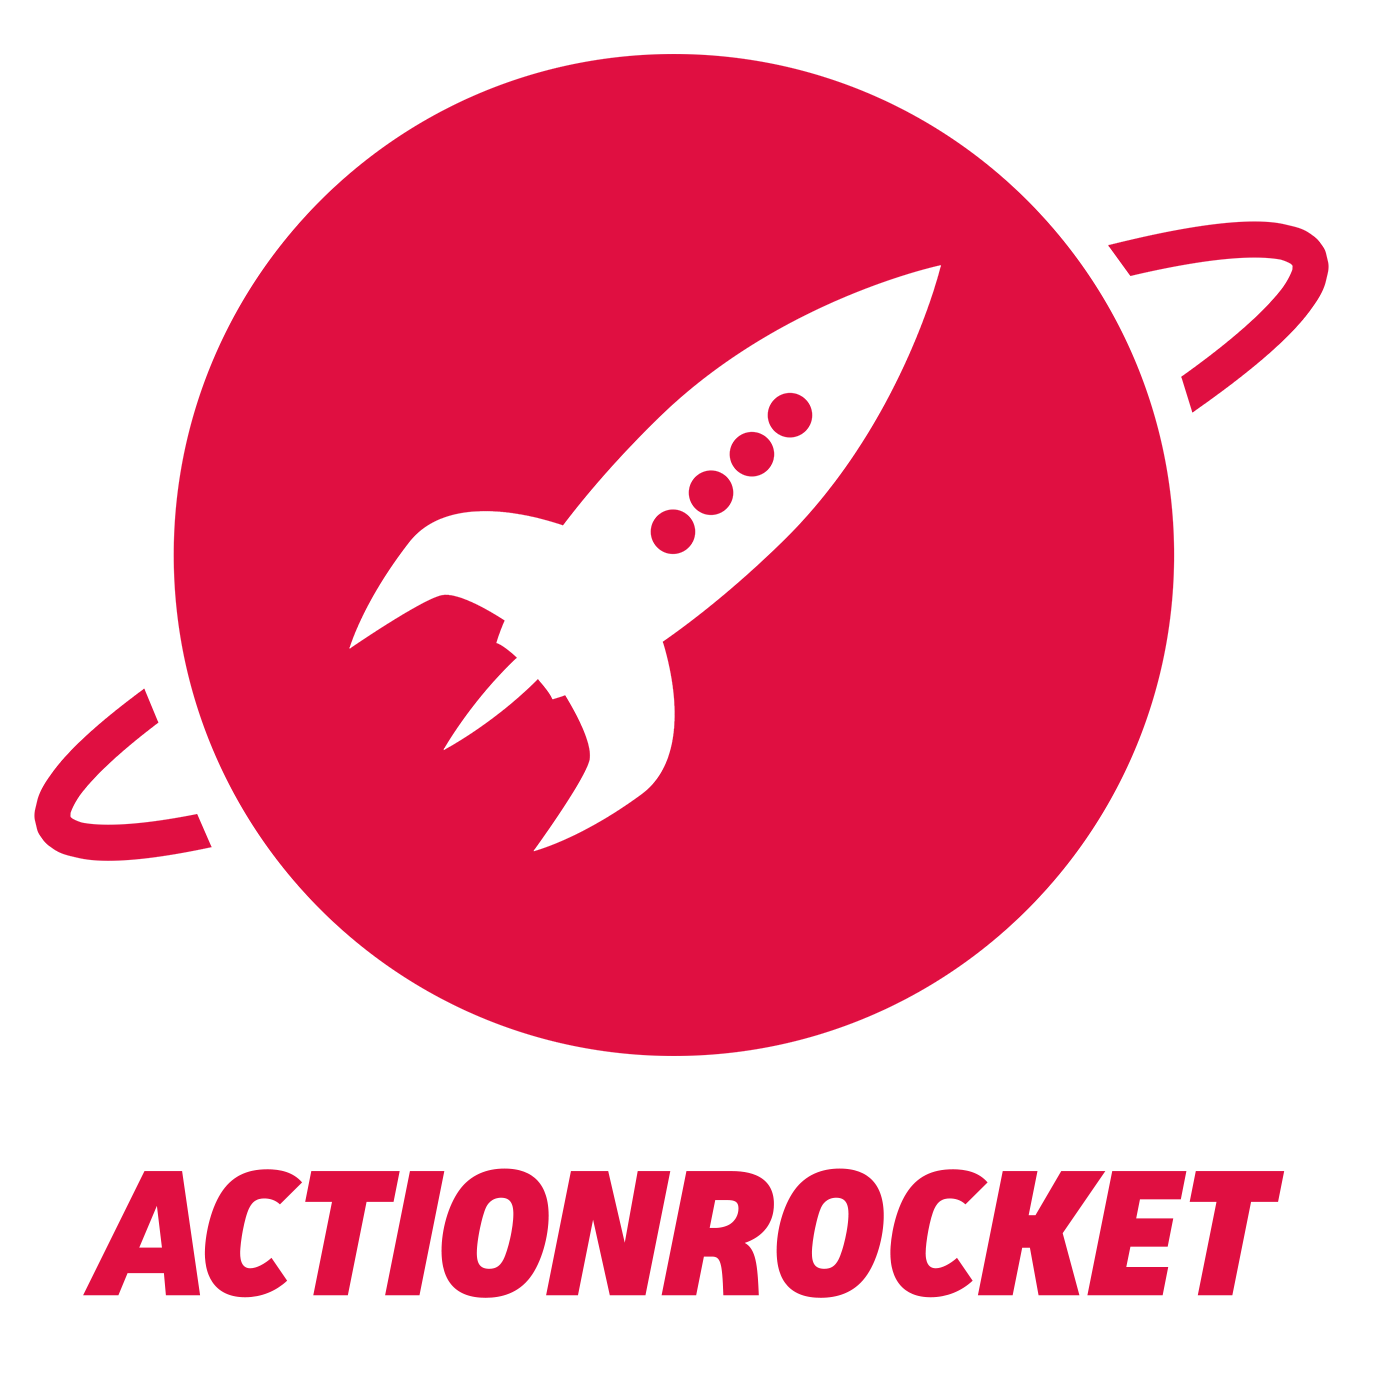 Action Rocket